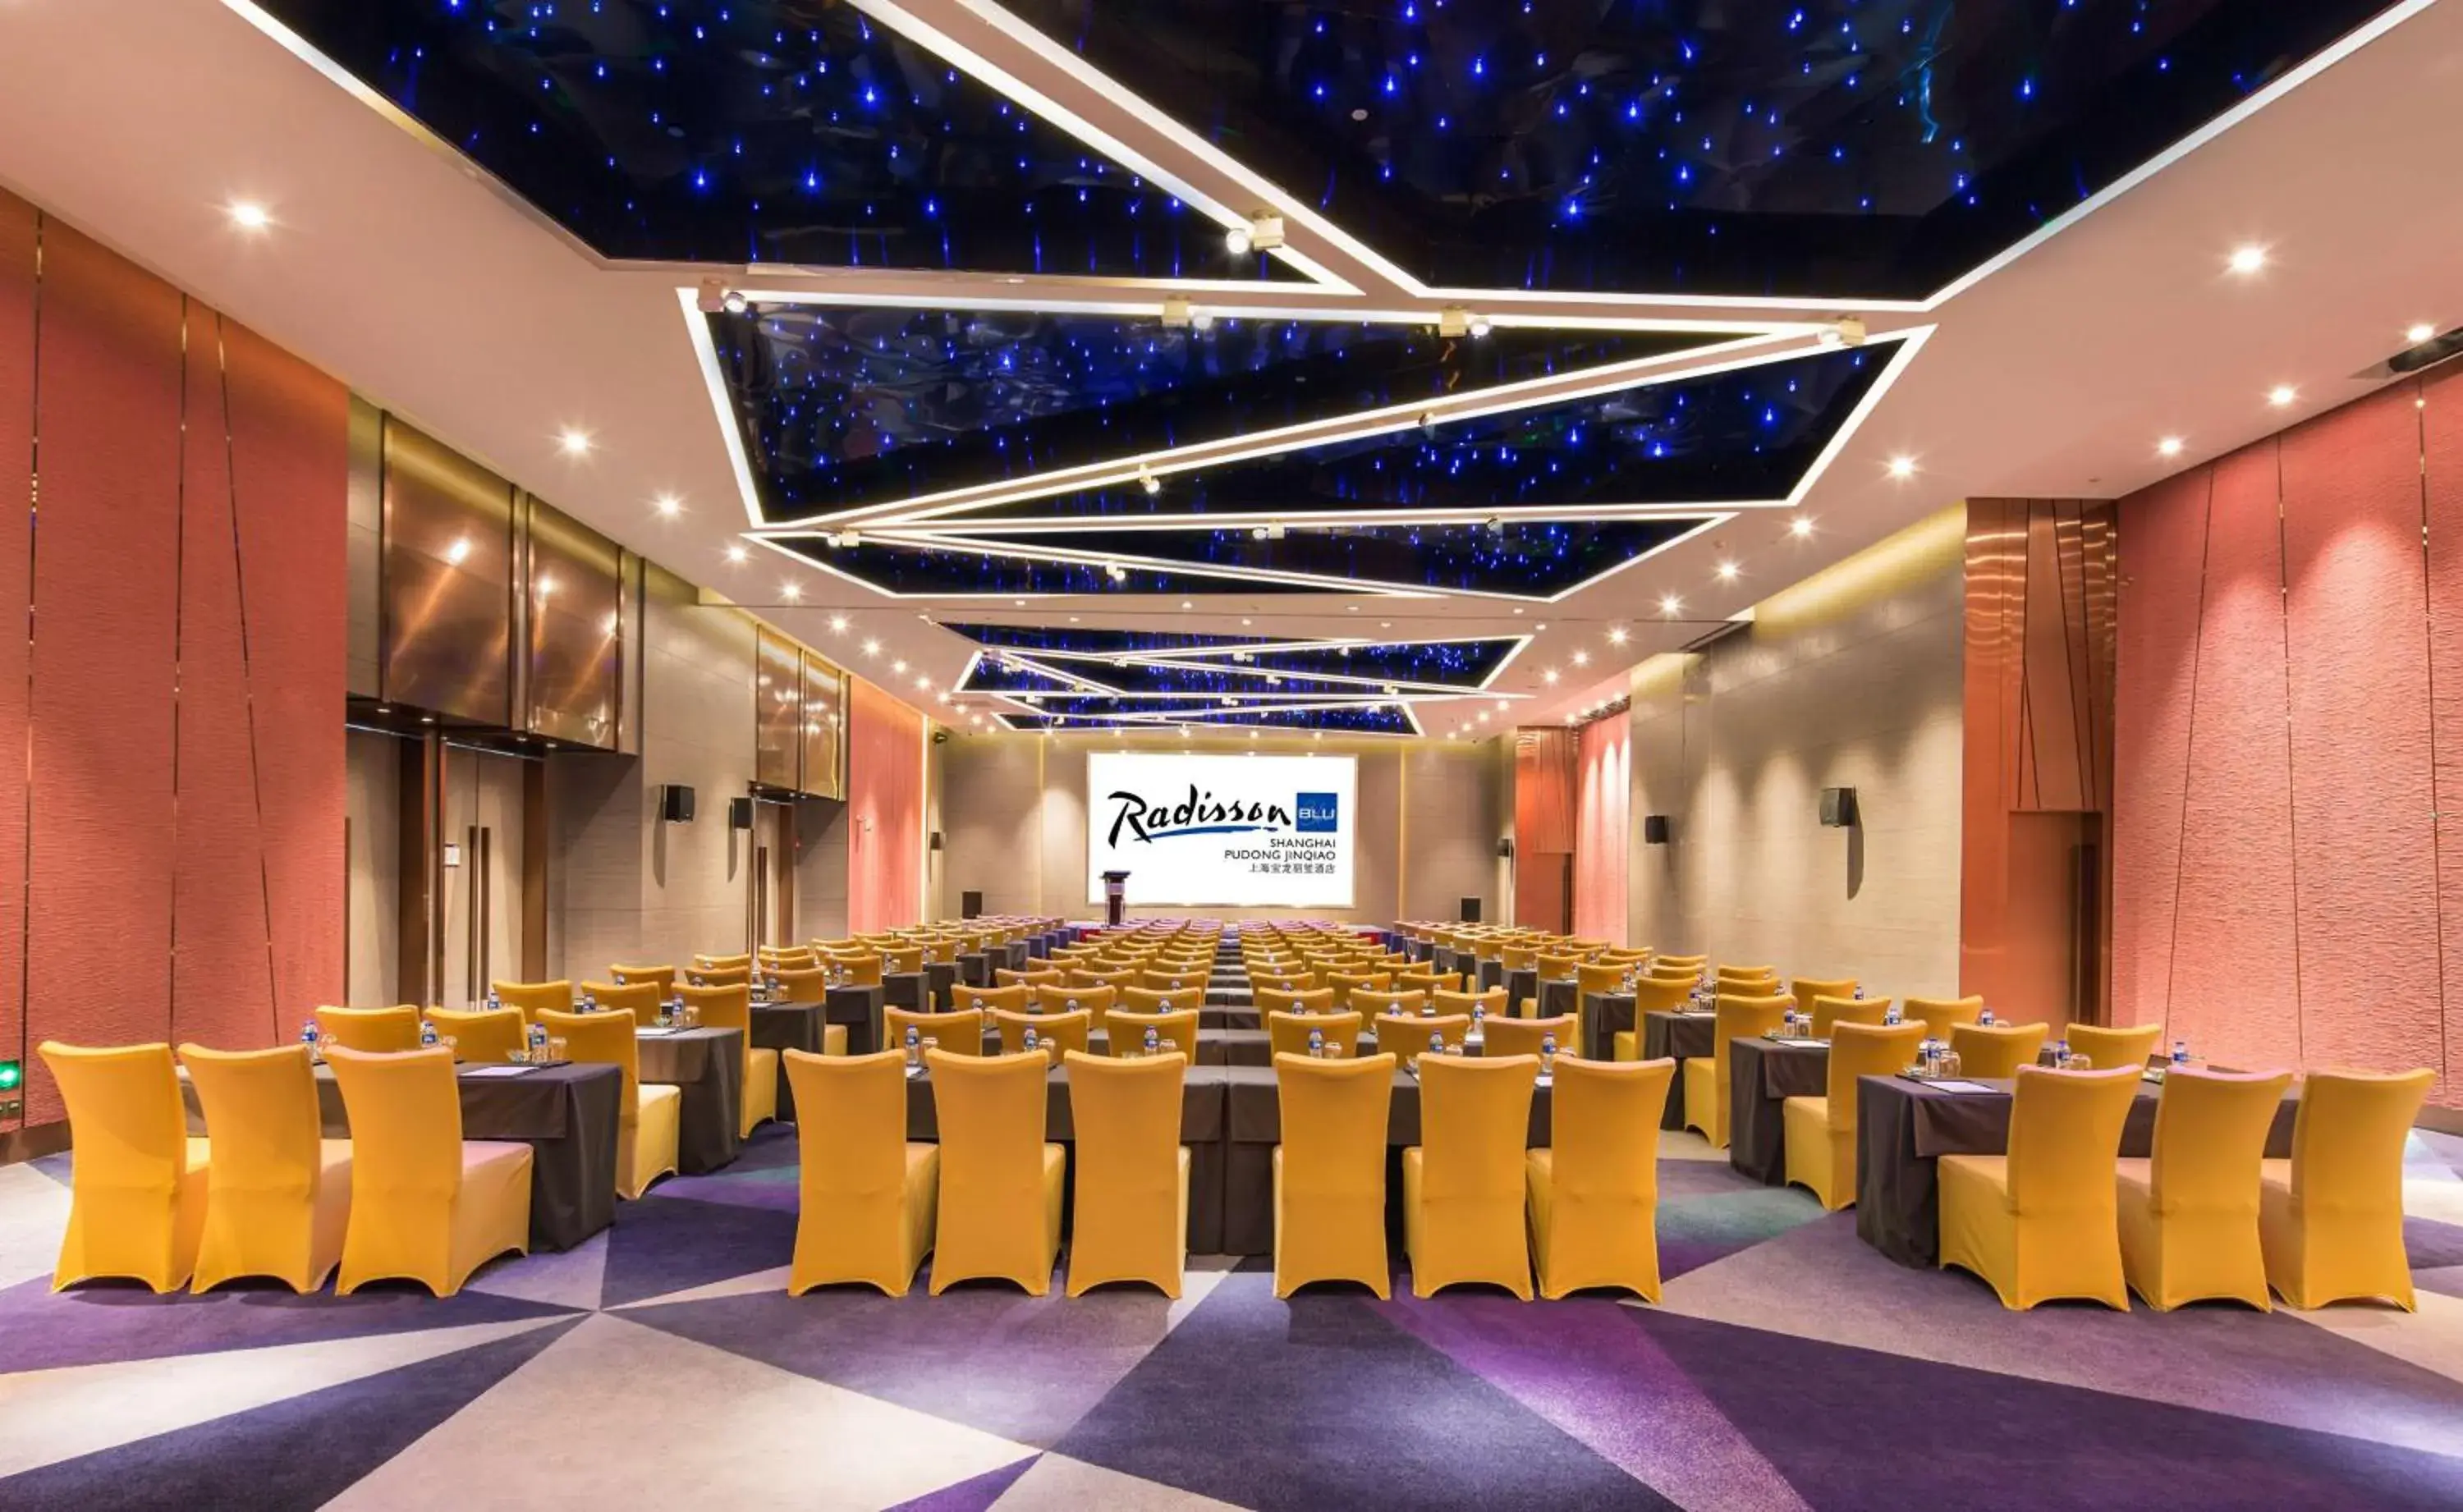 Banquet/Function facilities, Banquet Facilities in Radisson Blu Shanghai Pudong Jinqiao